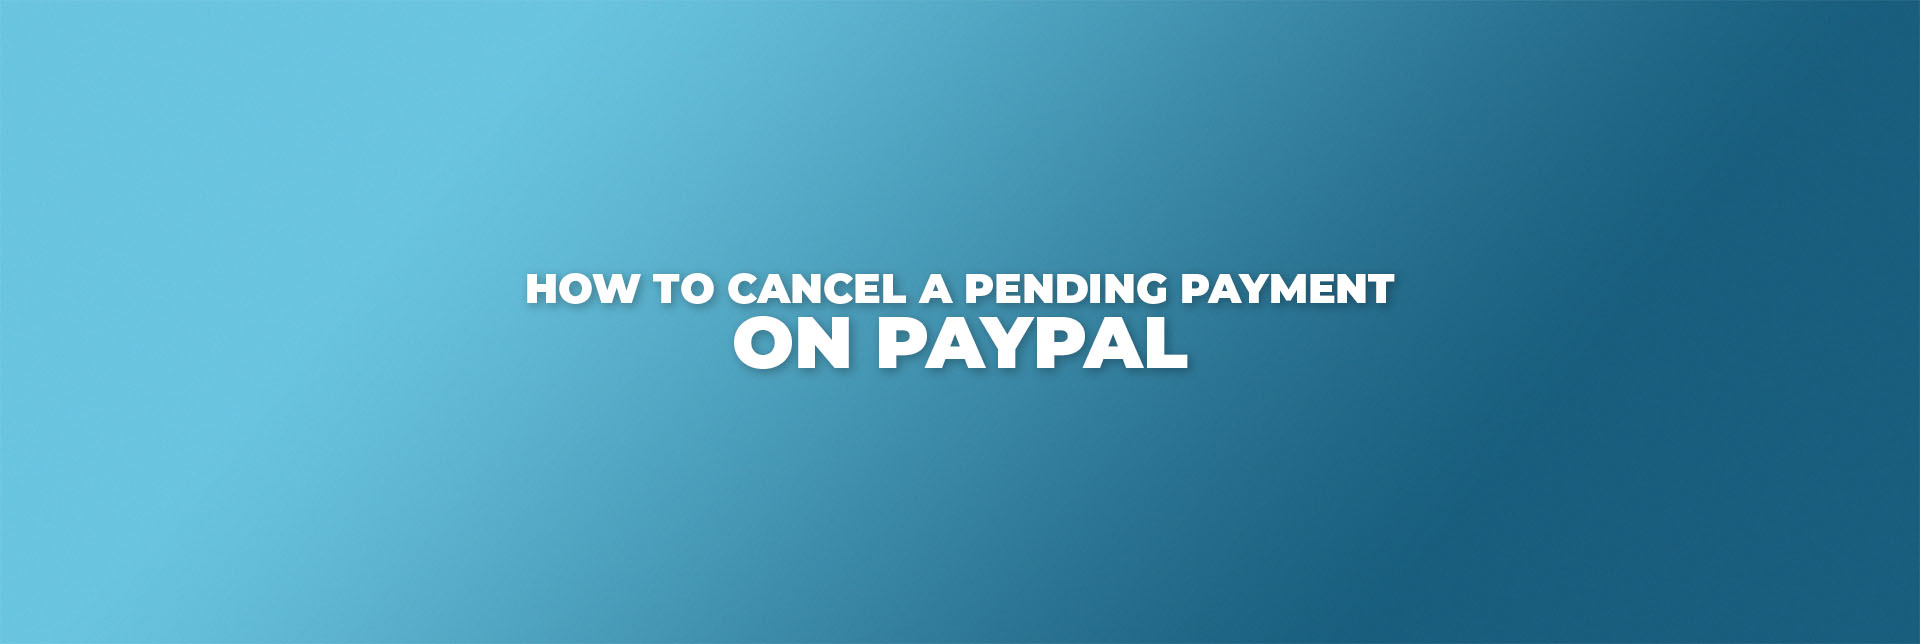 cancel-pending-payment